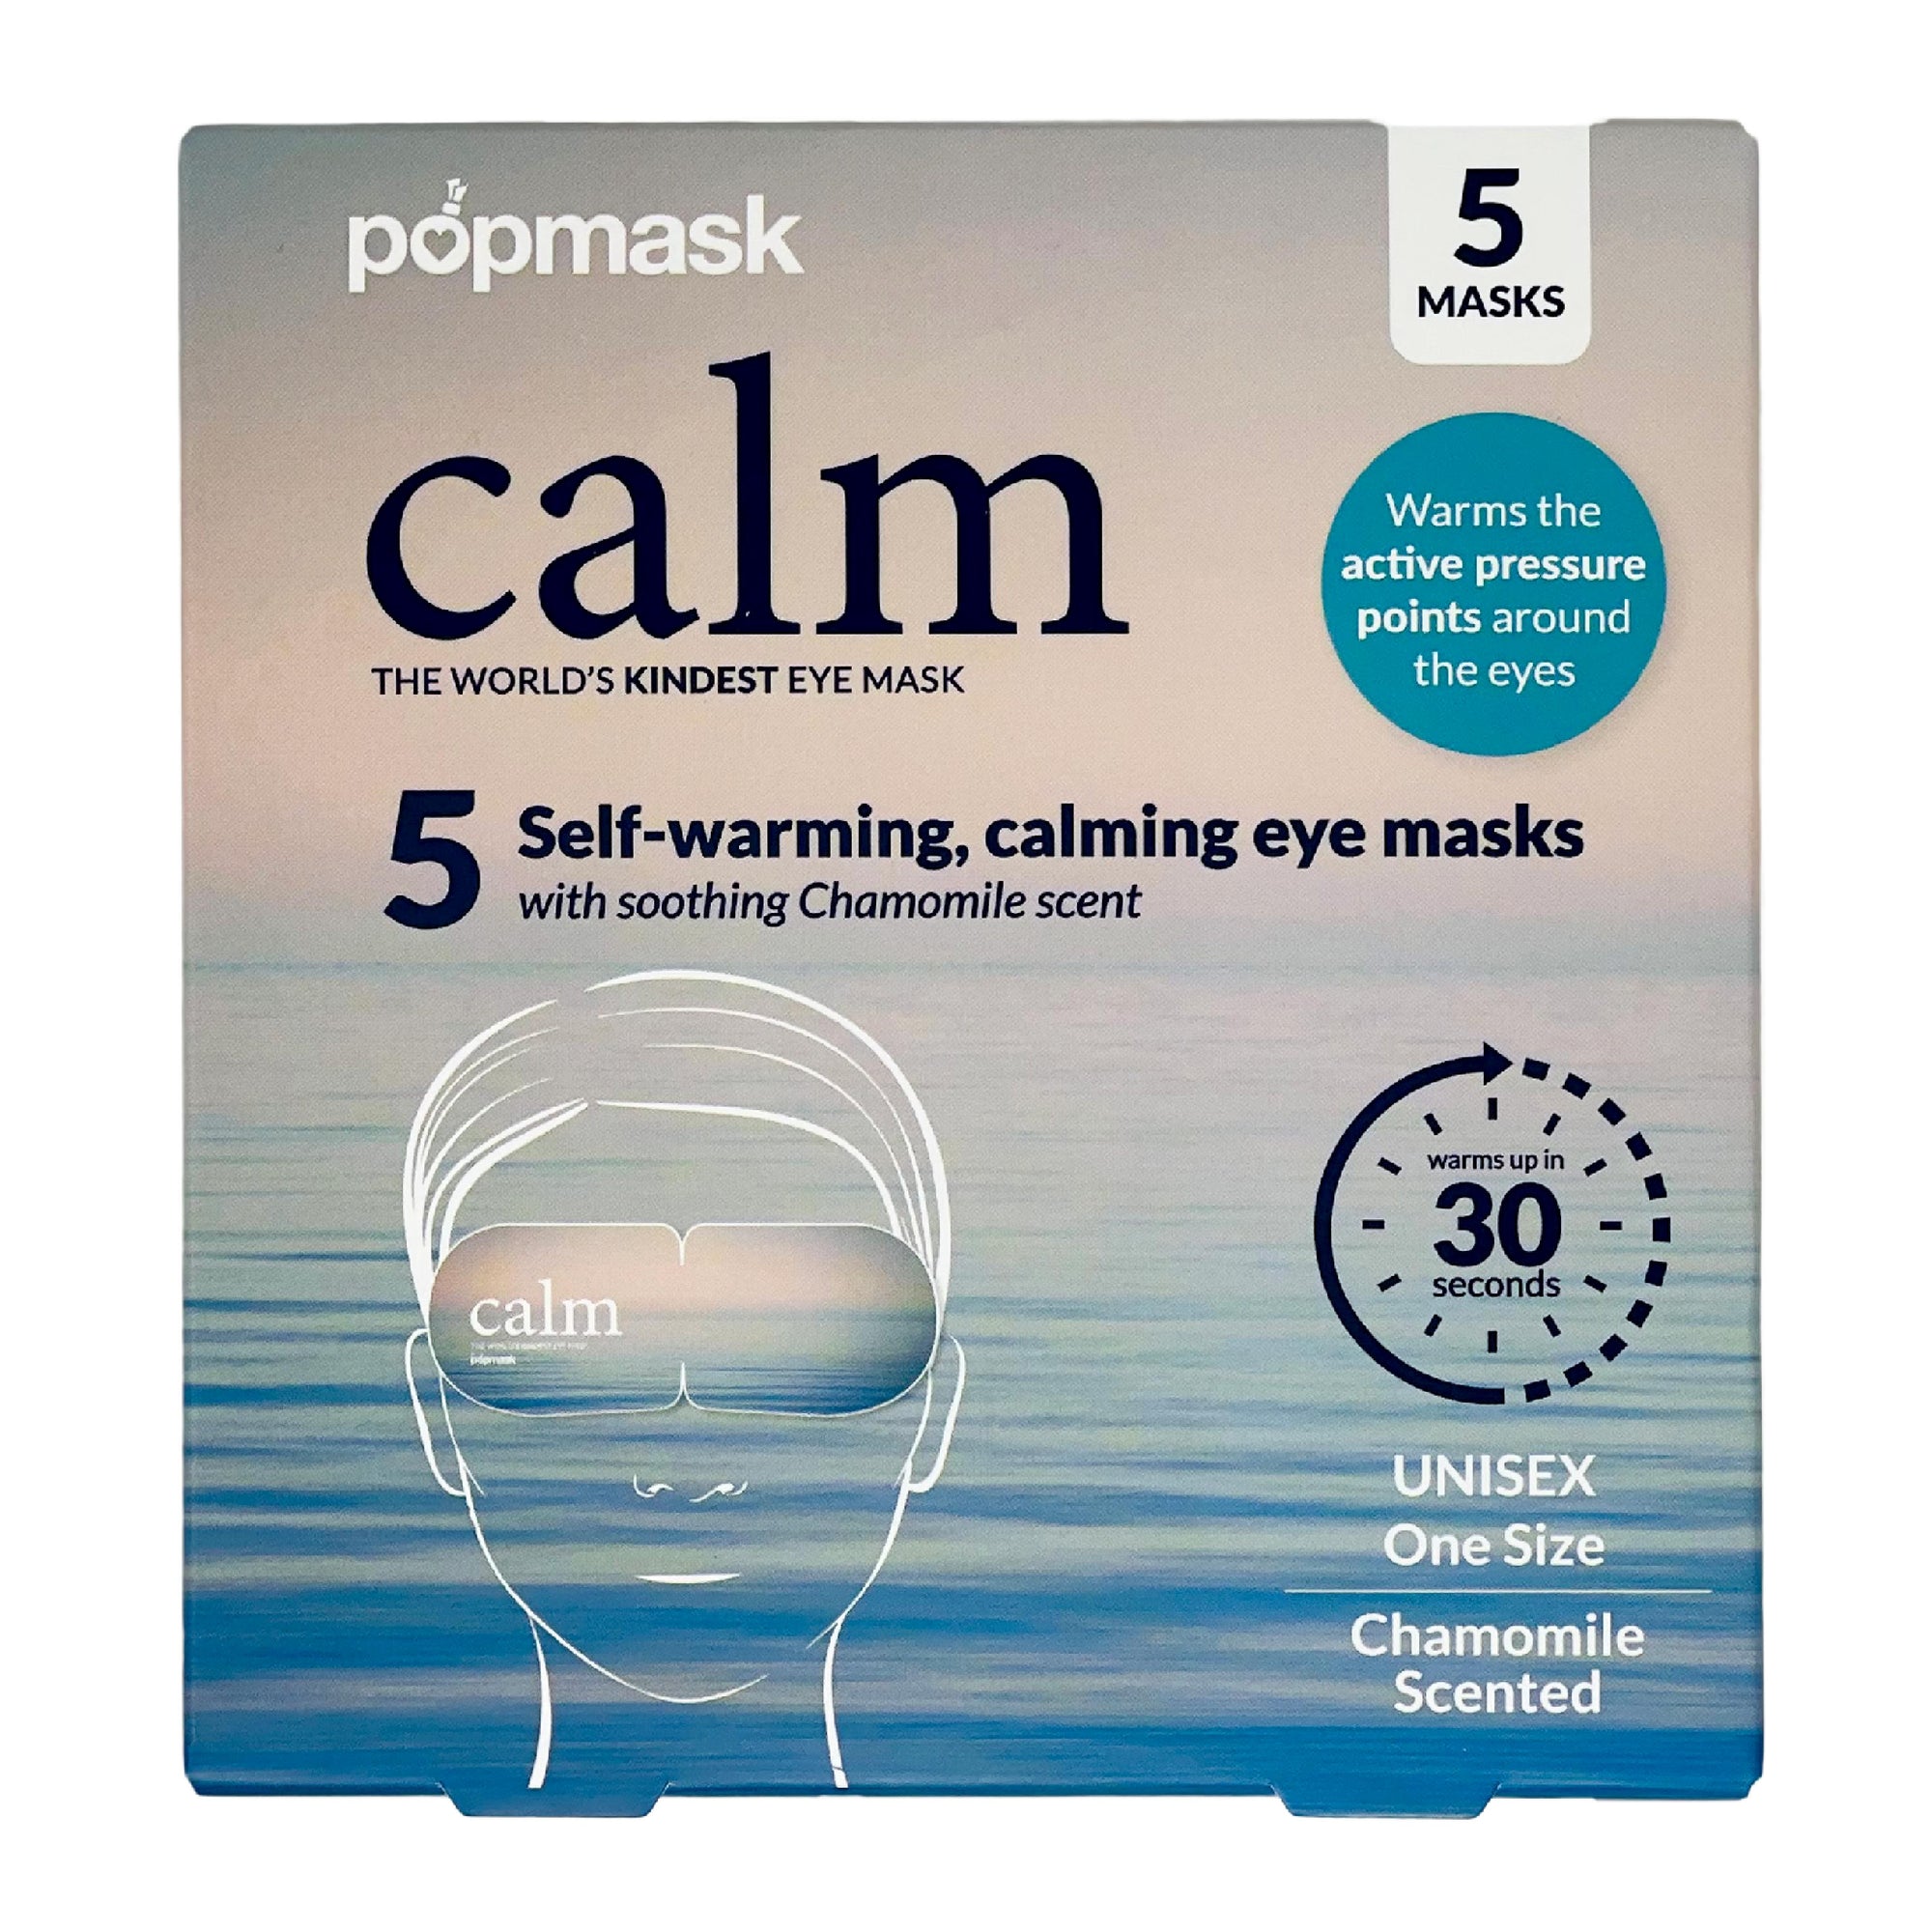 Popmask Calm Eyemask